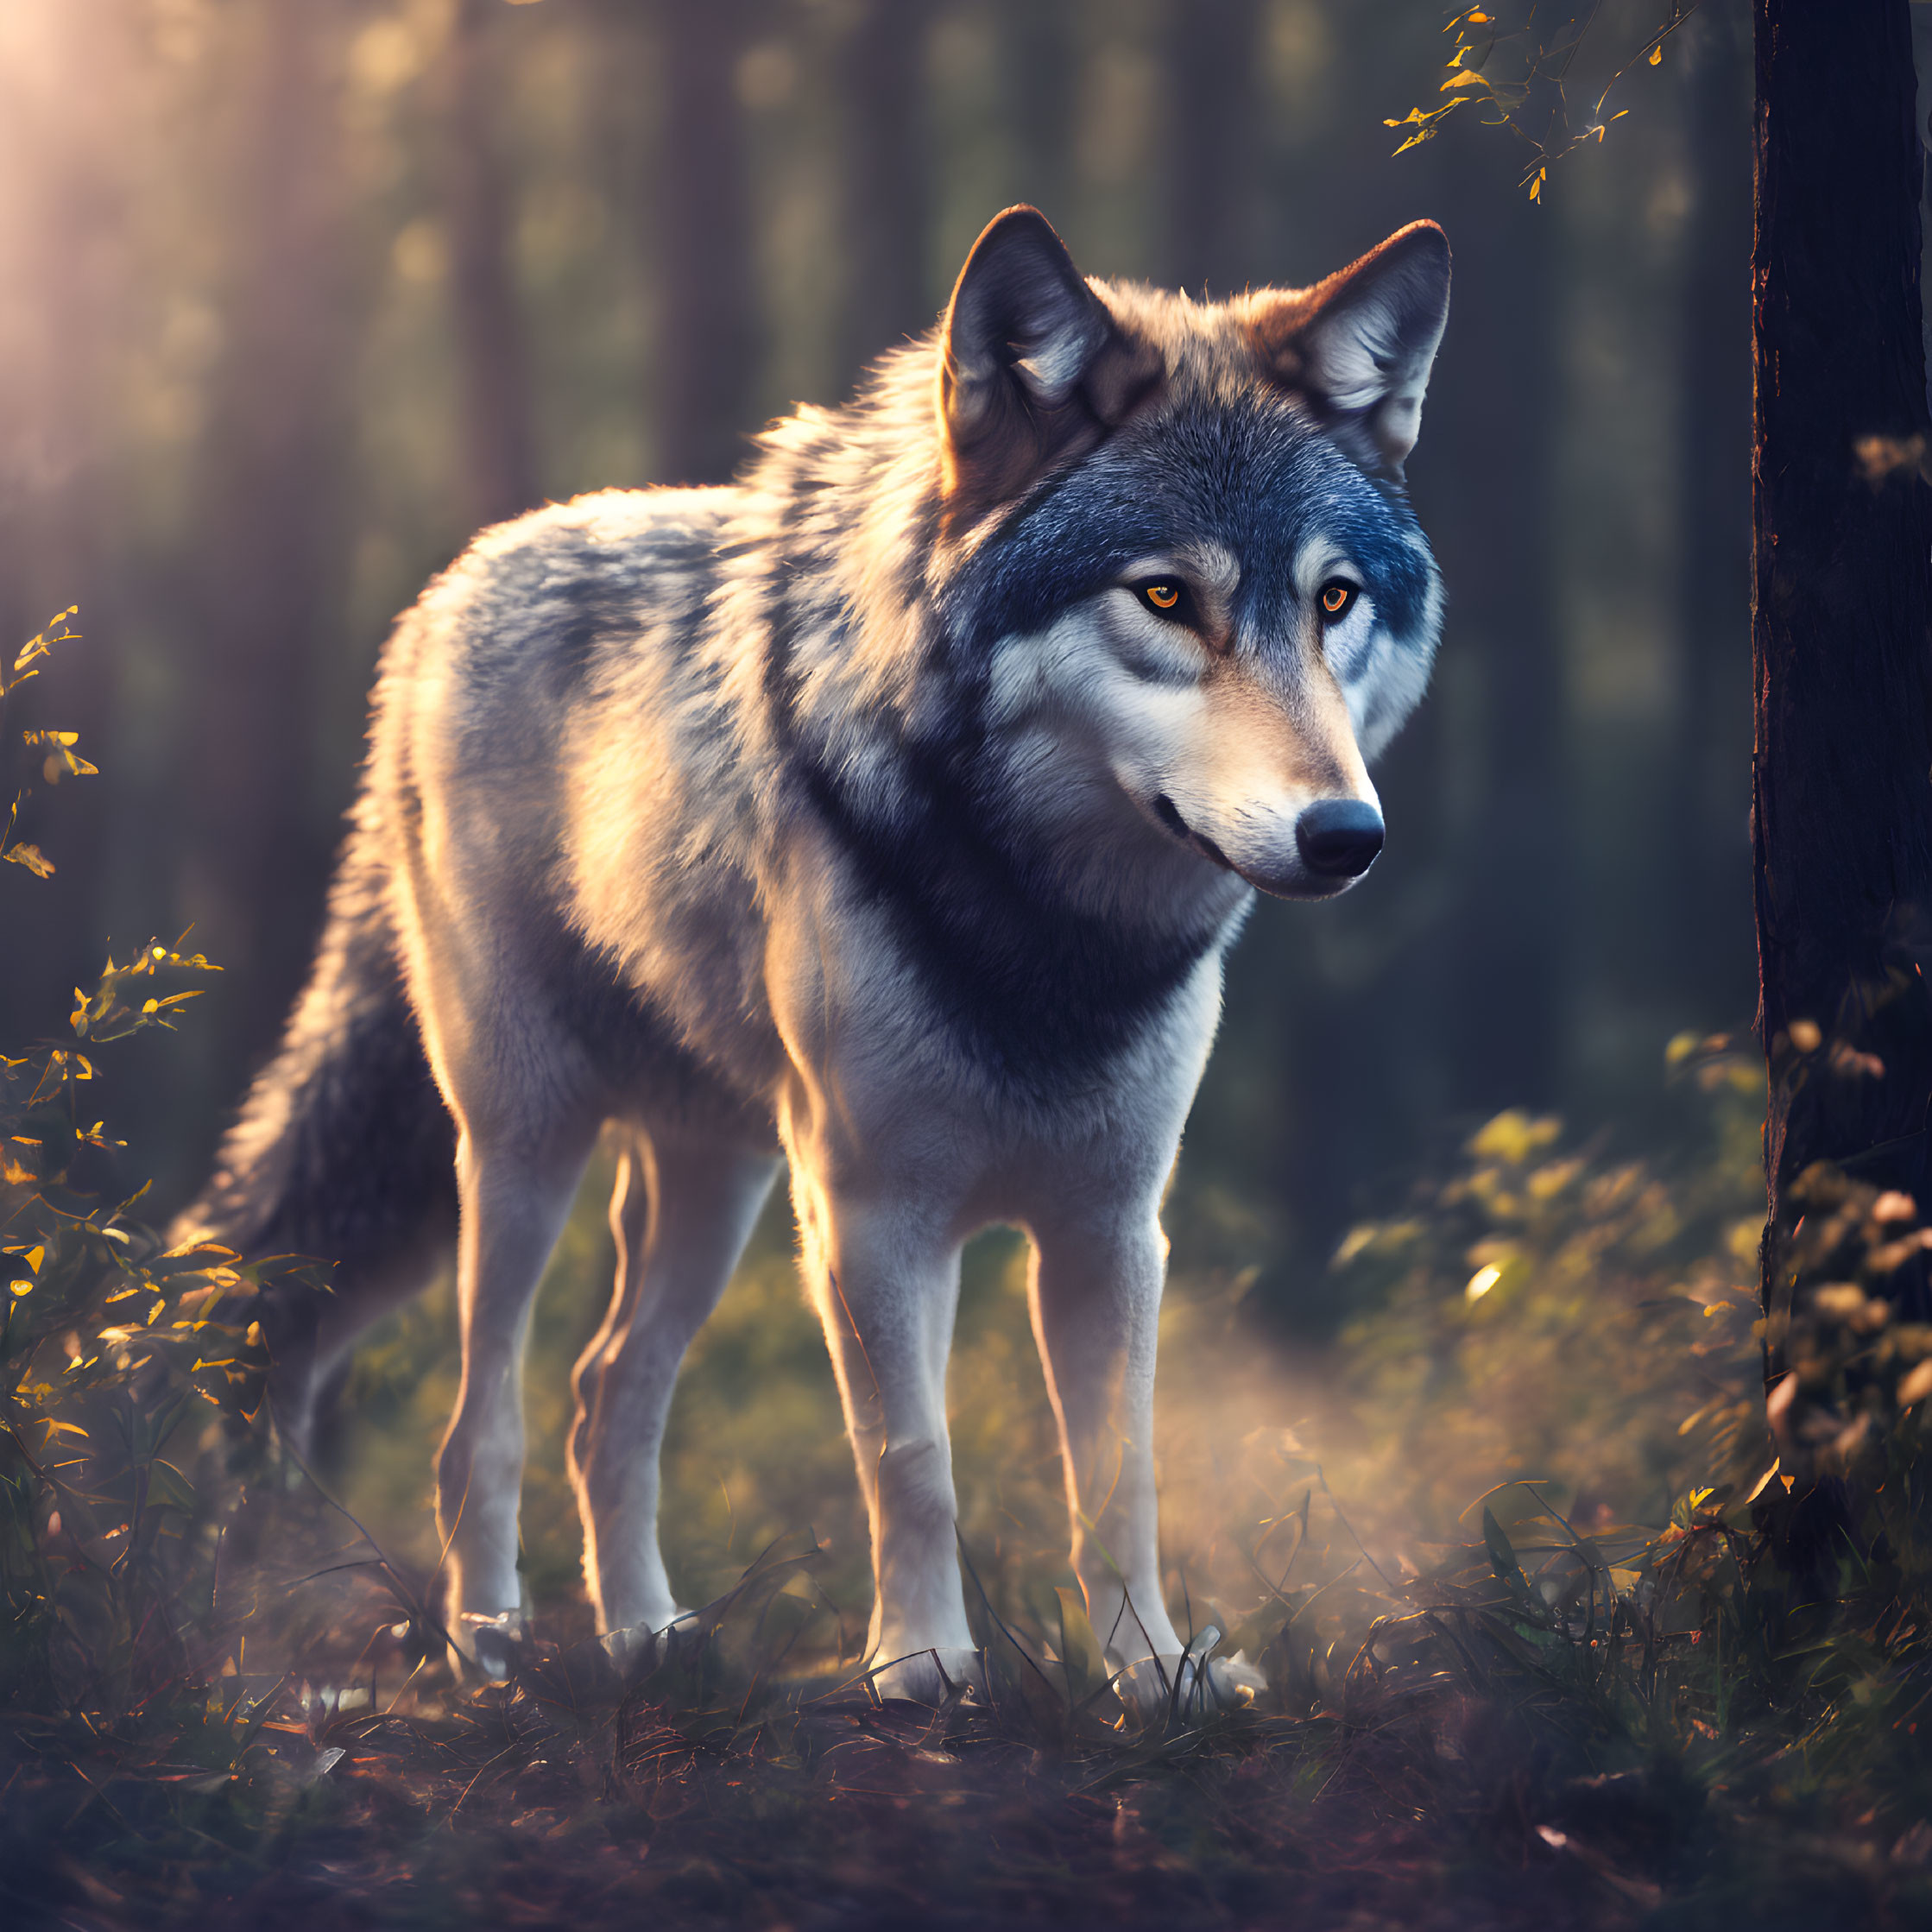 Mystical forest scene: Wolf in dappled sunlight